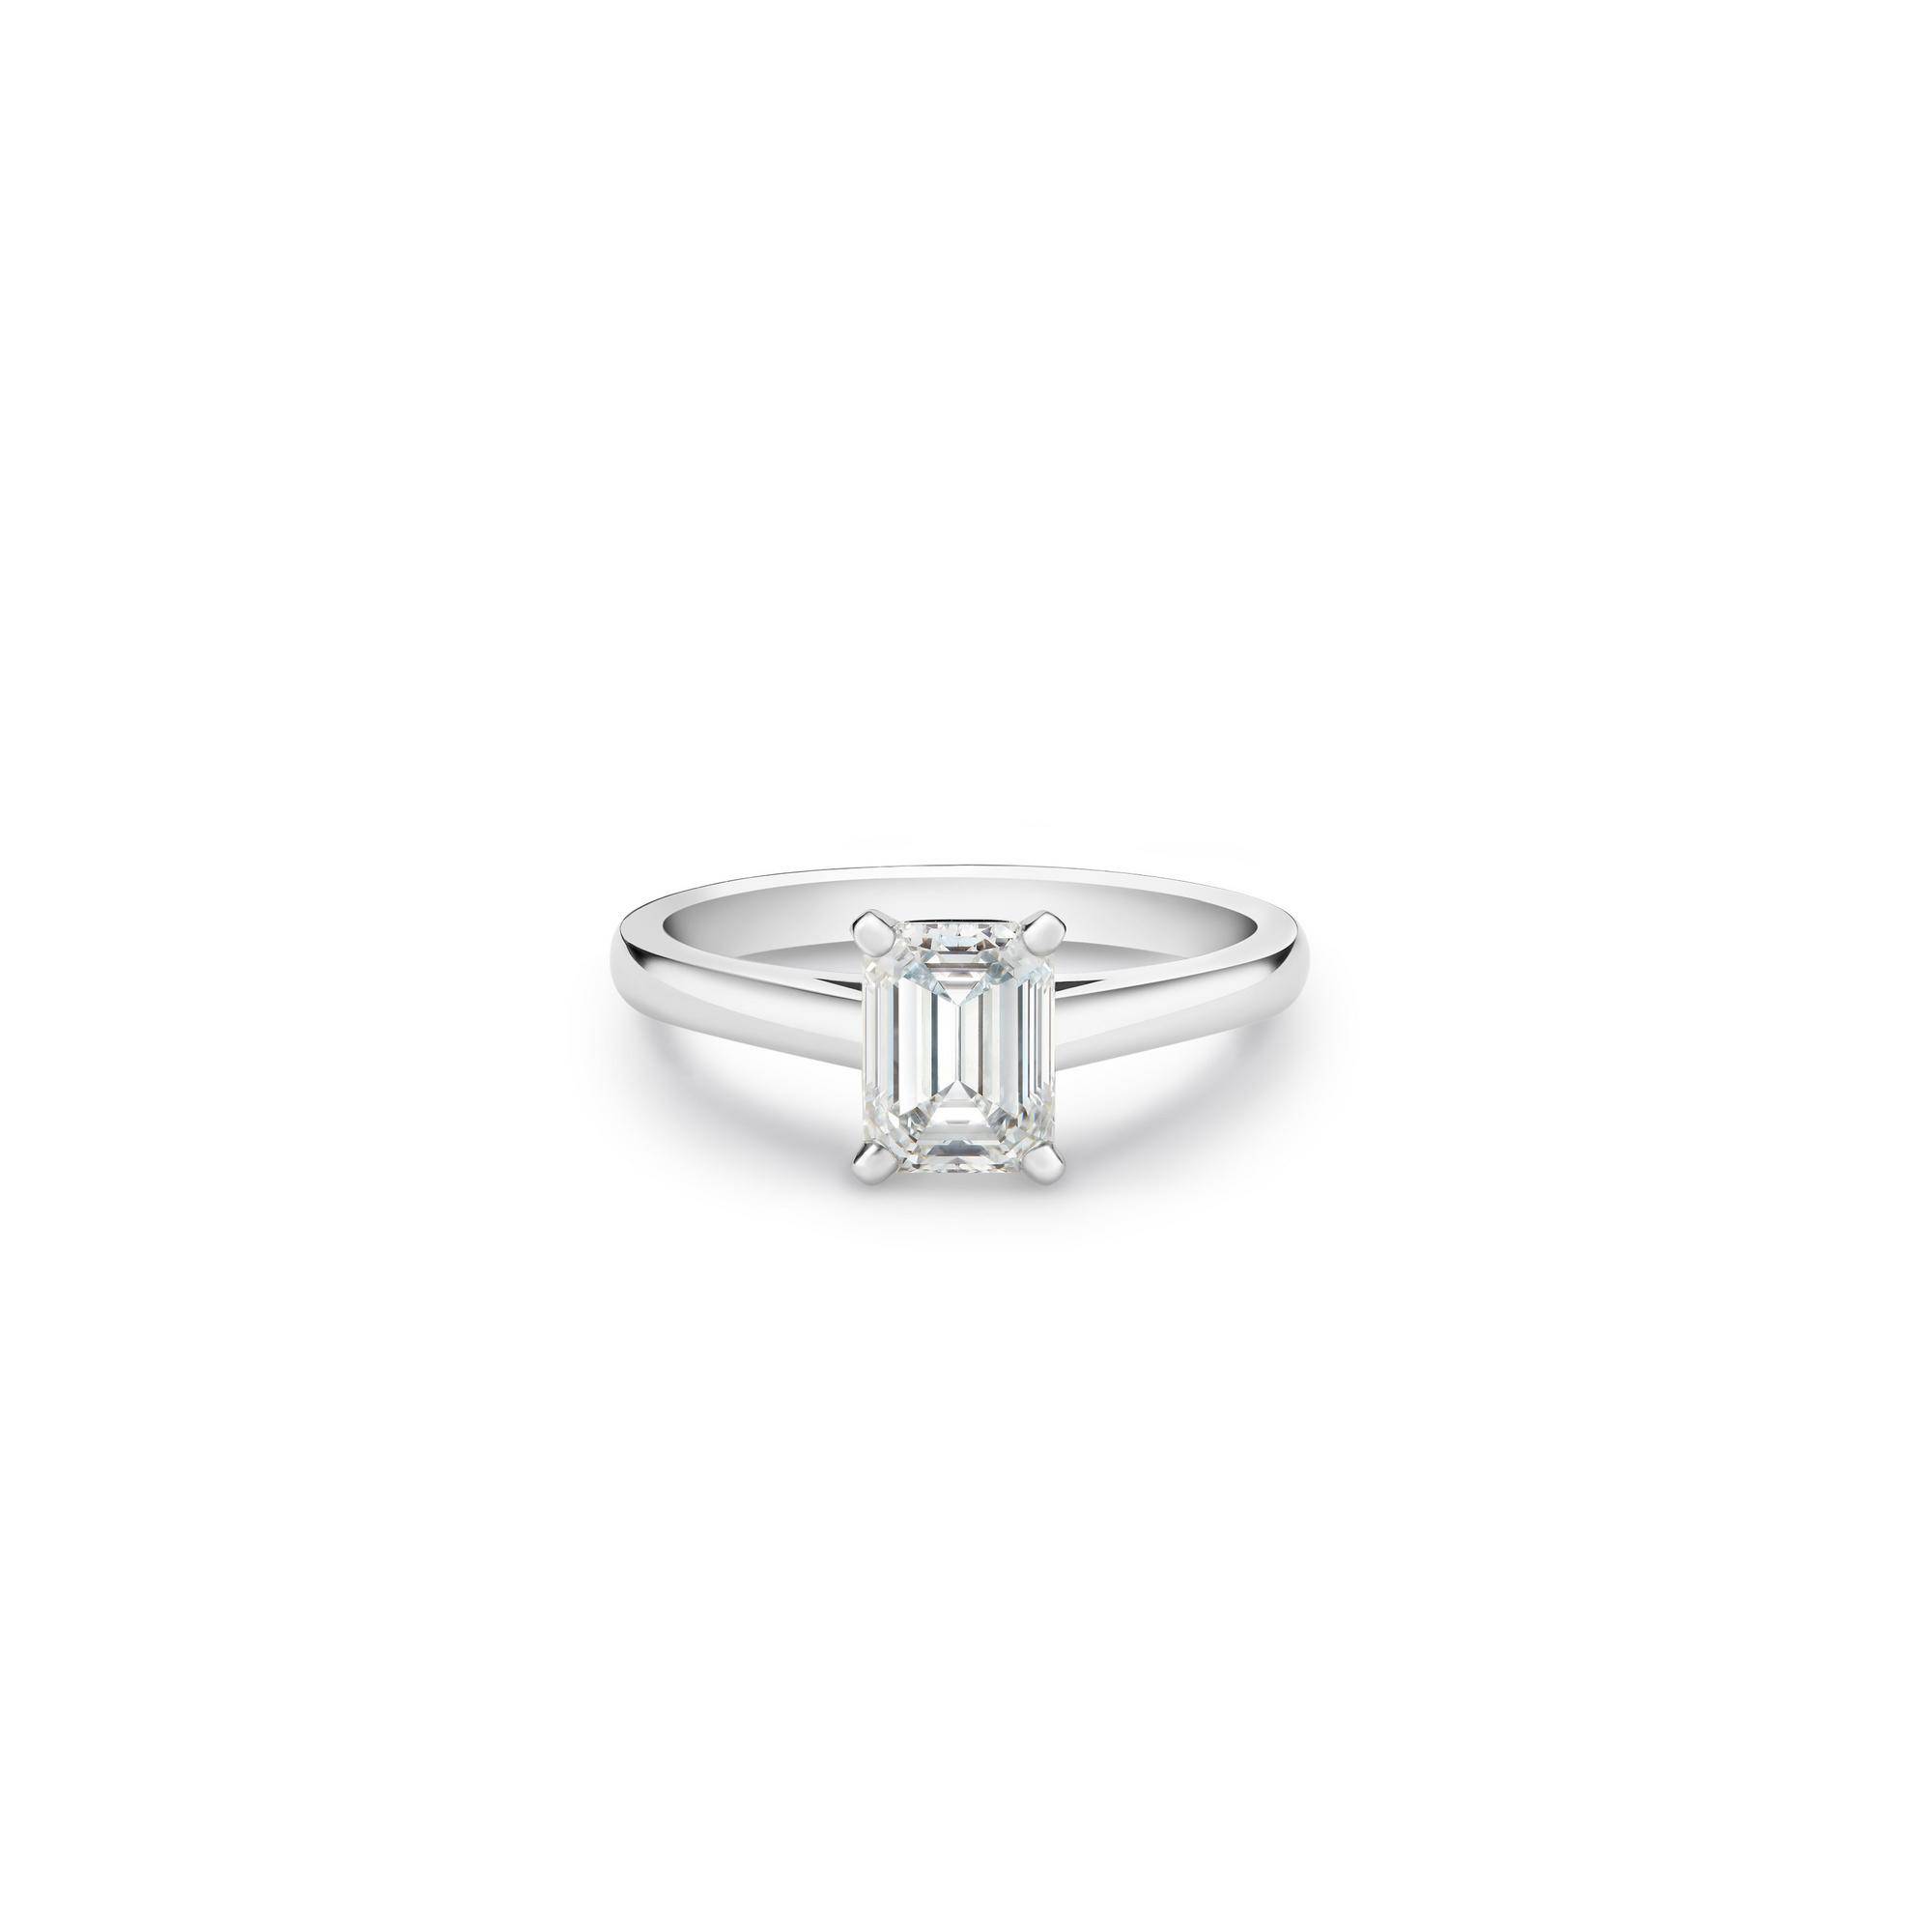 DB Classic鉑金祖母綠式鑽石戒指，中央主鑽由1卡起。HK$89,000起